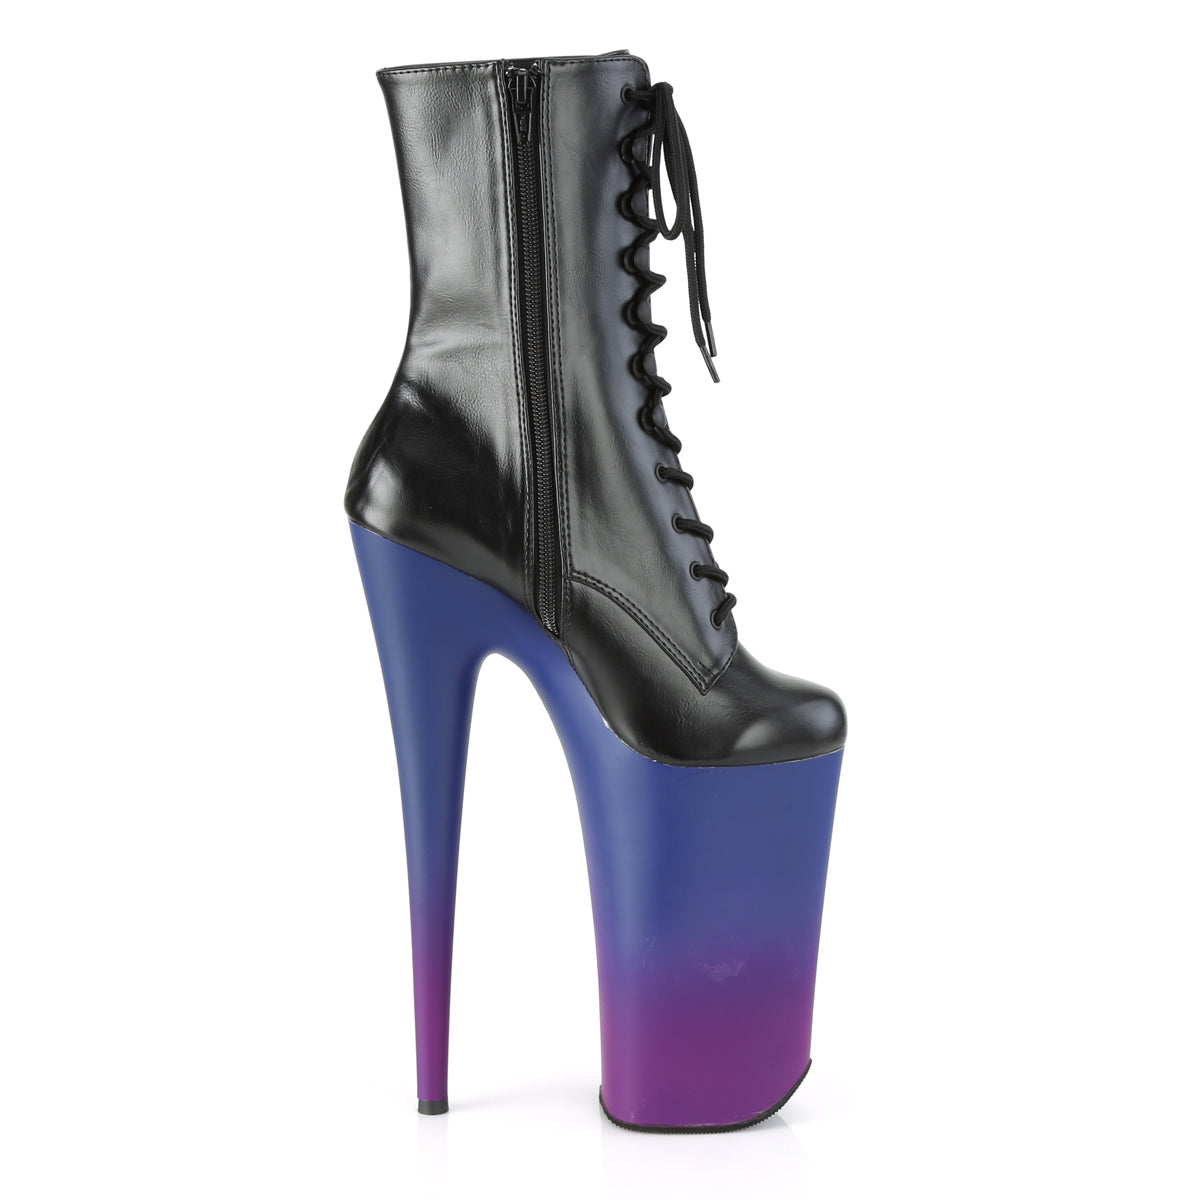 Pleaser Womens Ankle Boots BEYOND-1020BP Blk Faux Leather/Blue-Purple Ombre